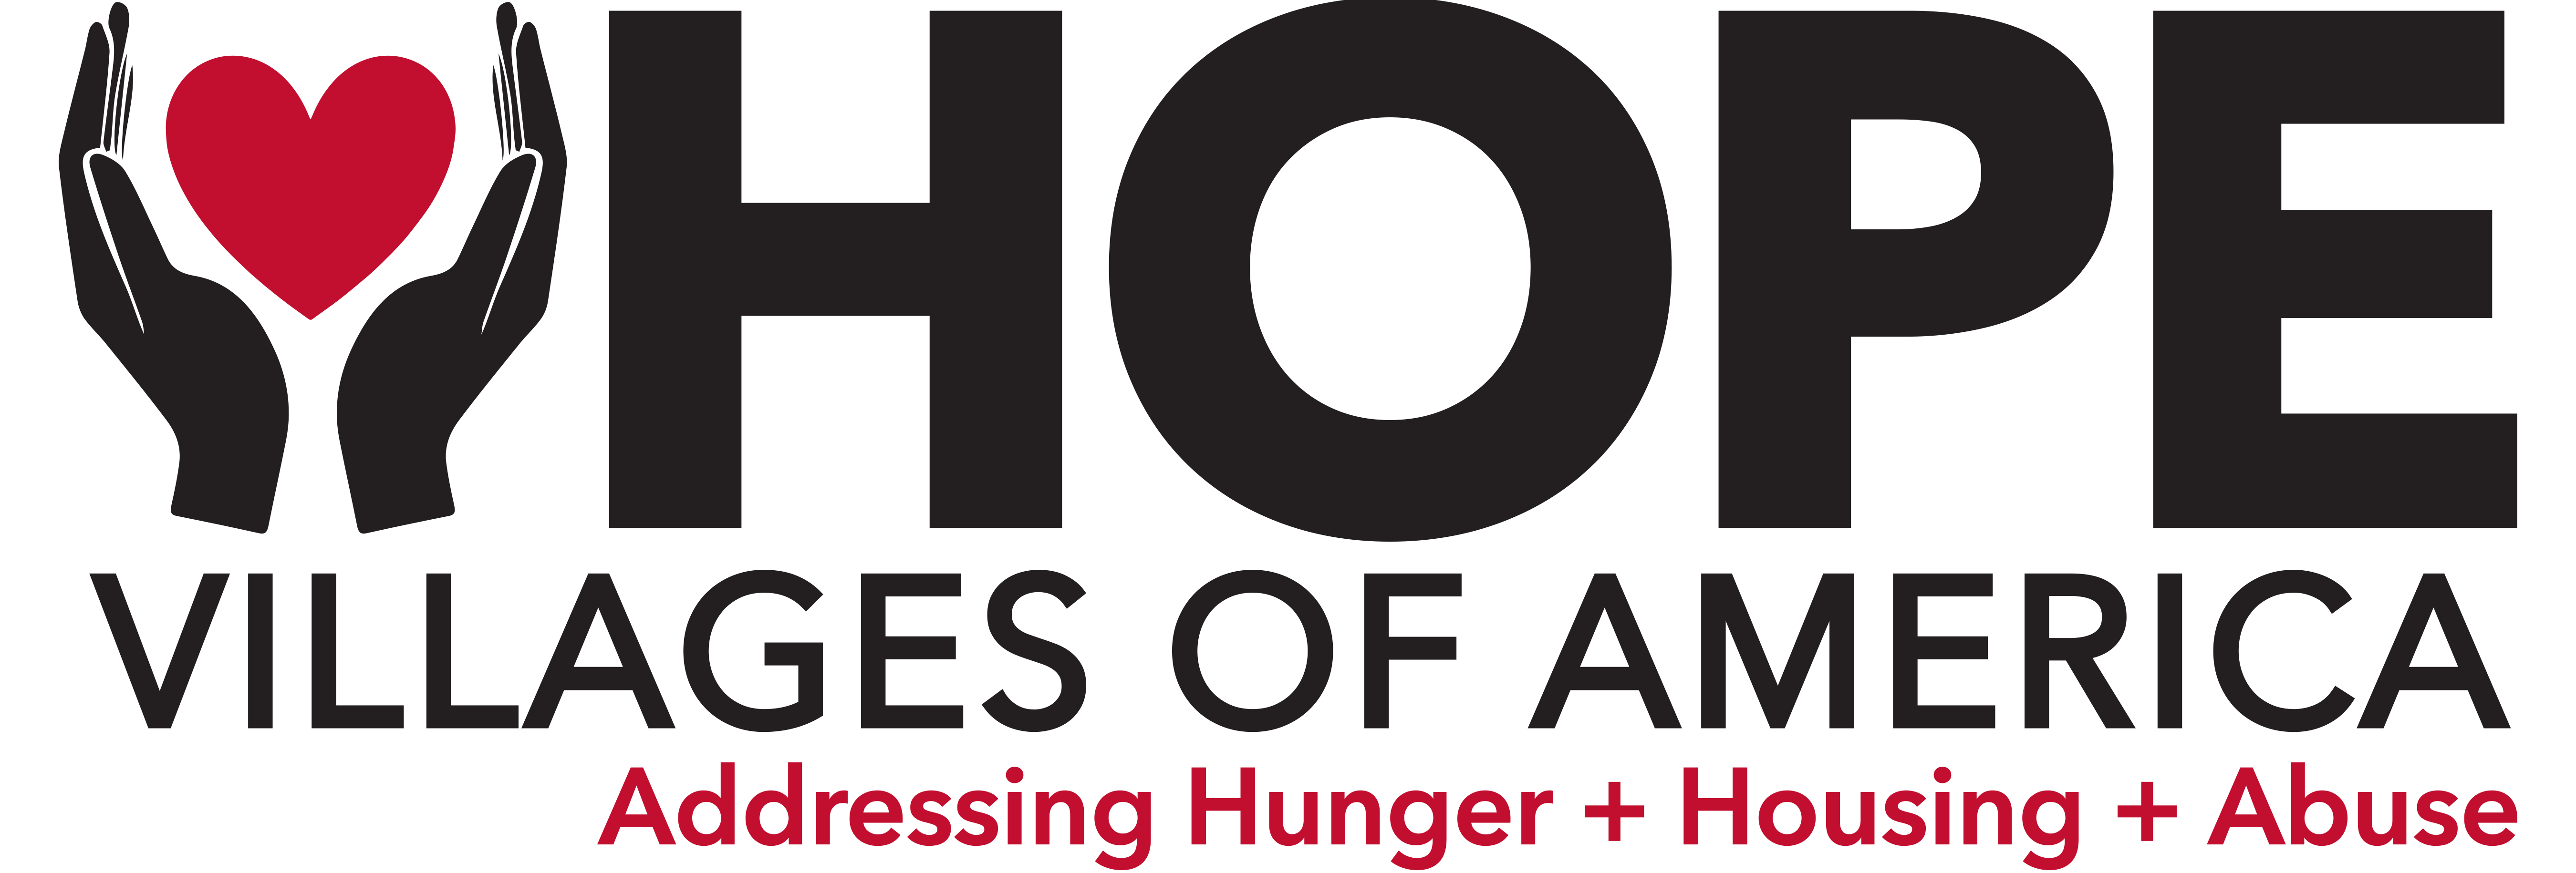 Hope Villages of America - Addressing Hunger + Housing + Abuse (logo)